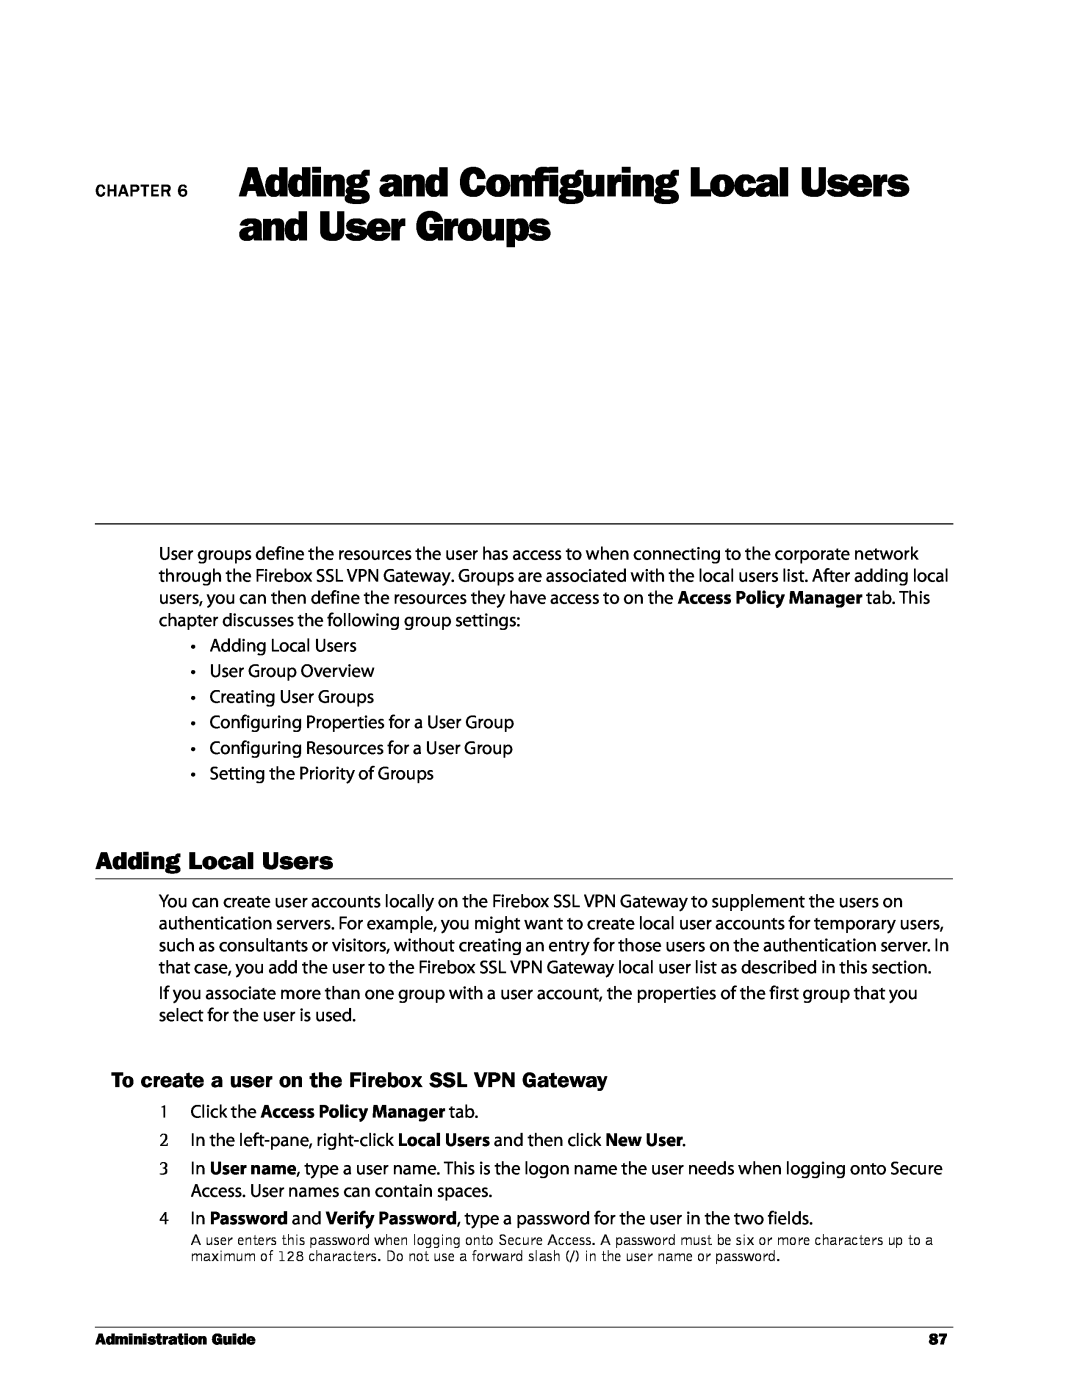 WatchGuard Technologies manual Adding Local Users, To create a user on the Firebox SSL VPN Gateway 